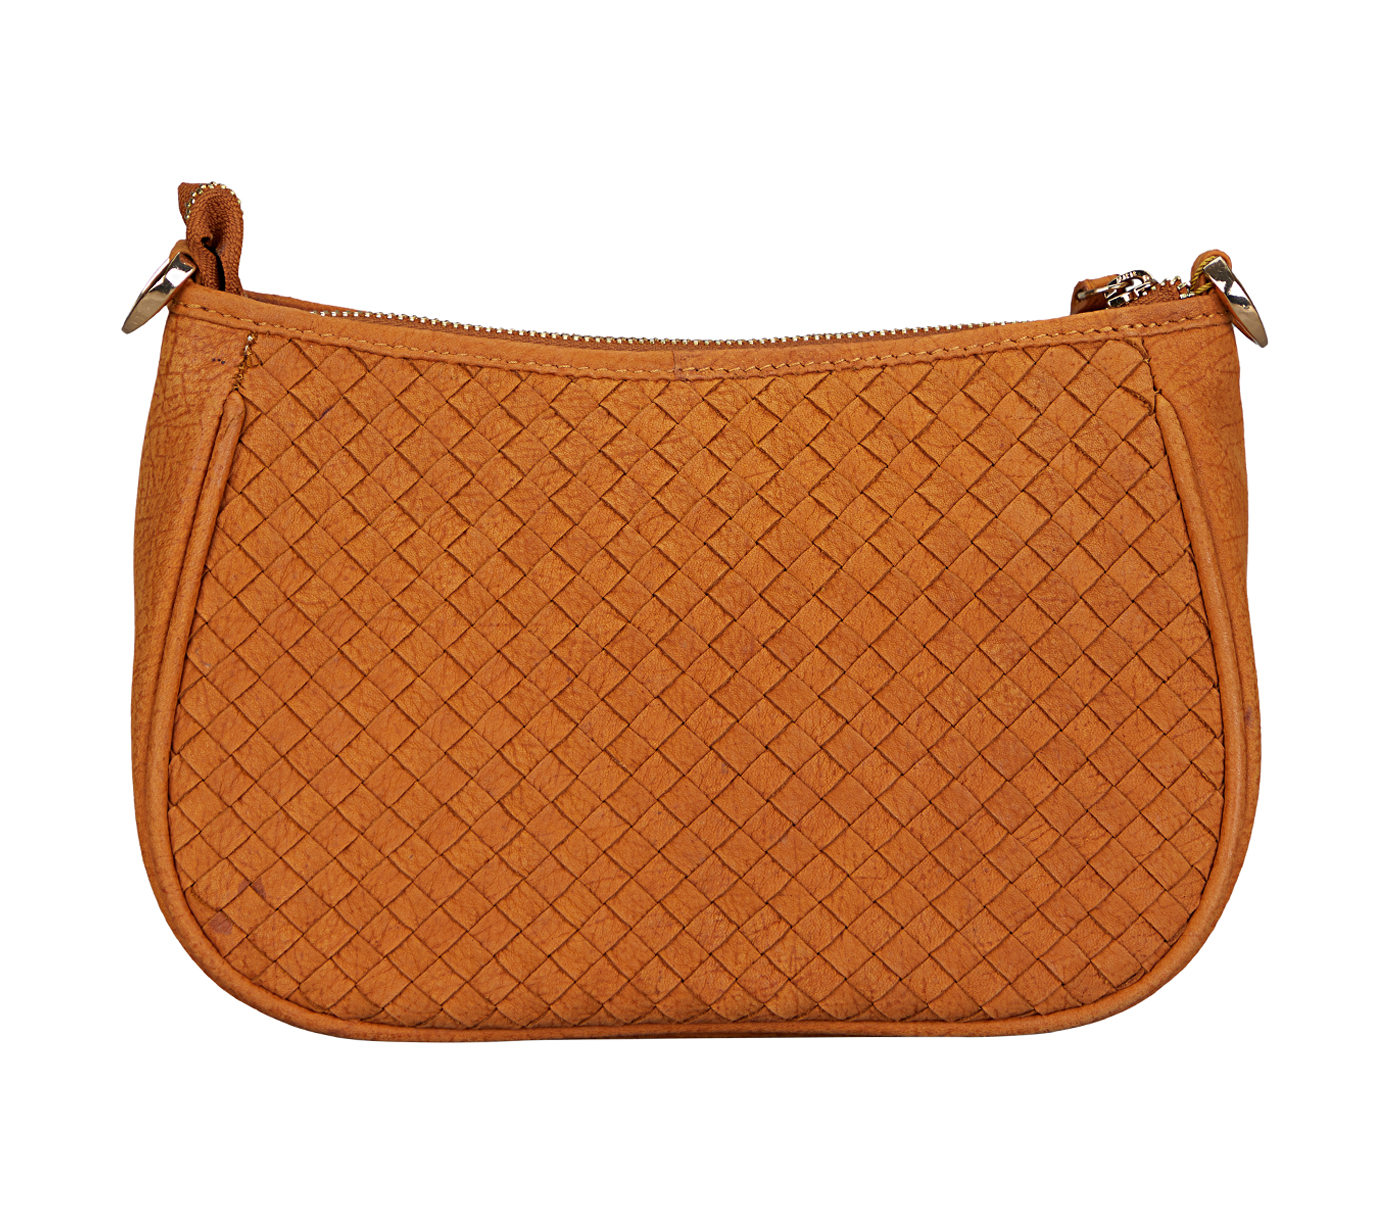 B896-Aurelia-Sling Cross Body Bag In Genuine Leather - Tan